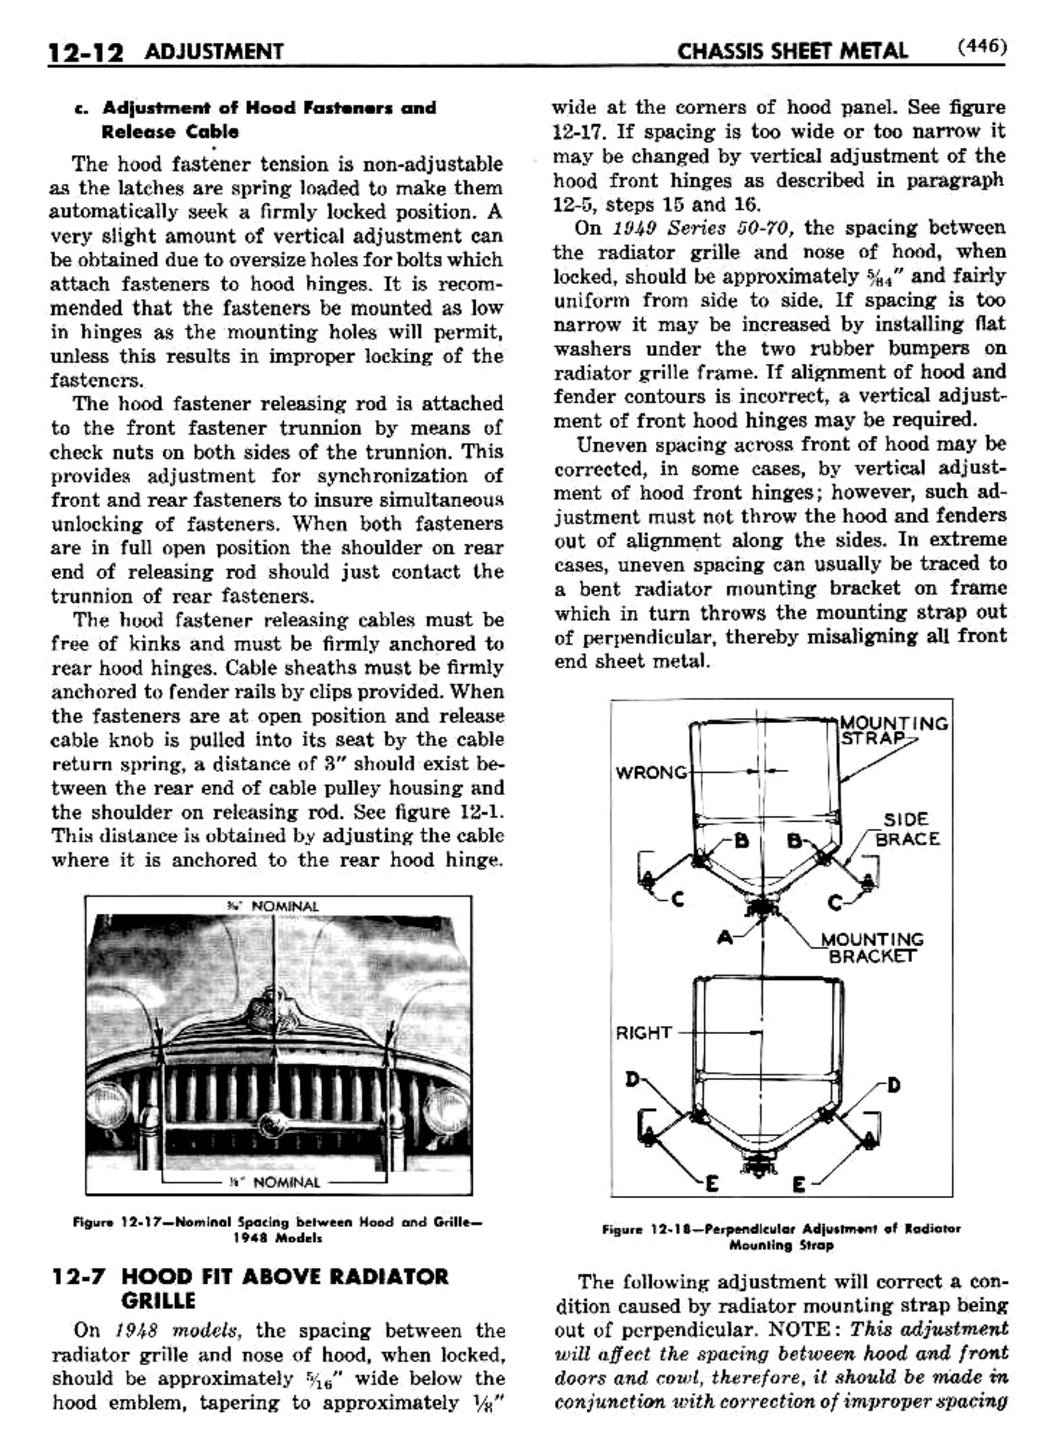 n_13 1948 Buick Shop Manual - Chassis Sheet Metal-012-012.jpg